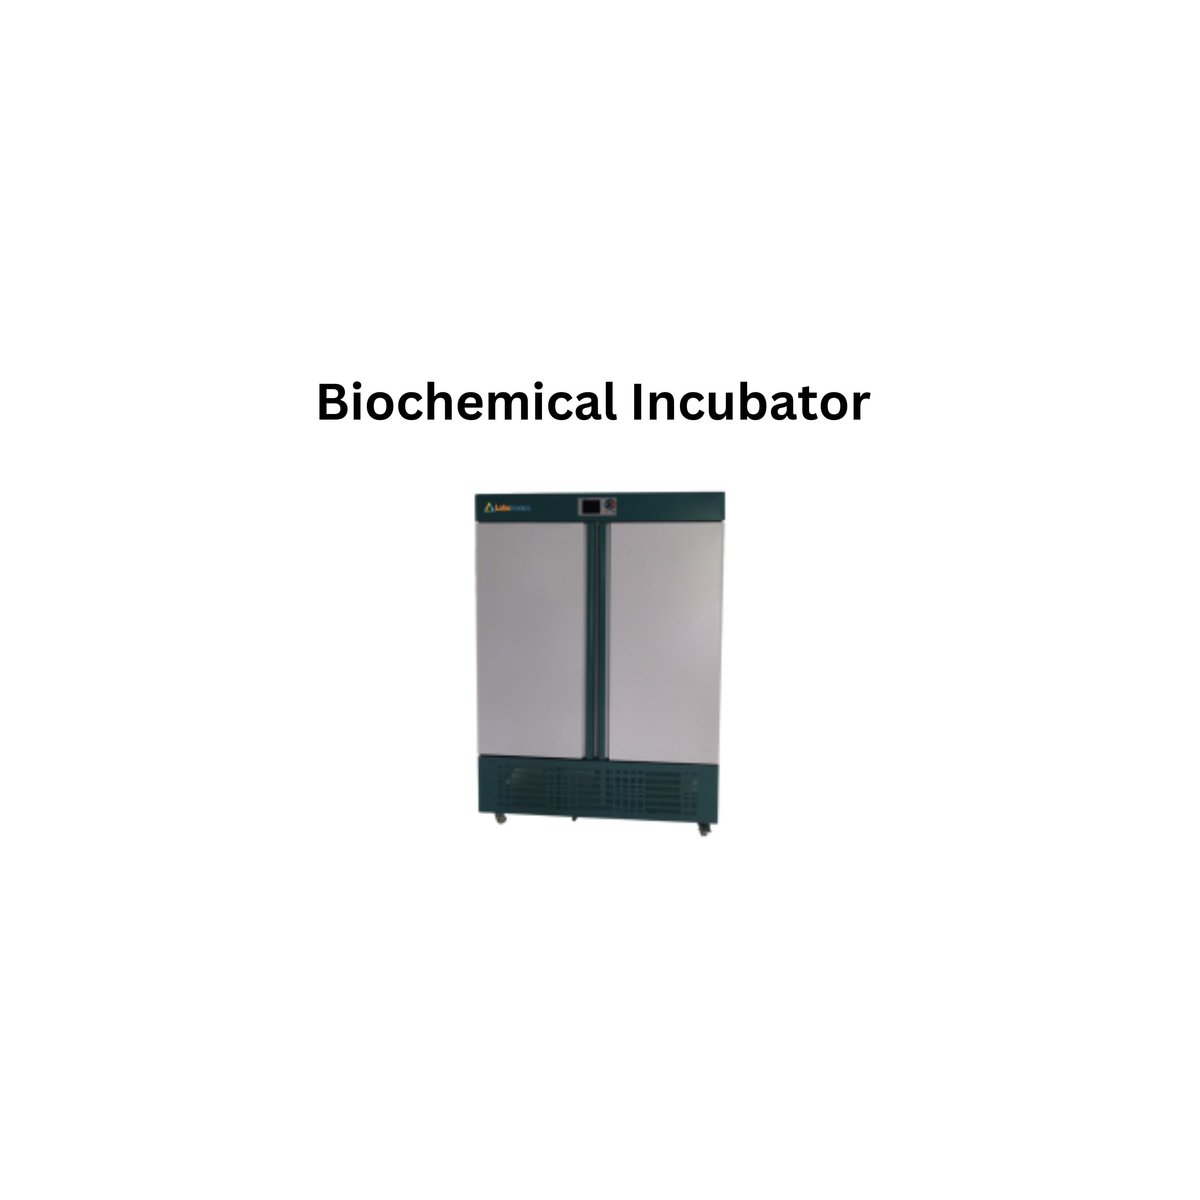 Biochemical Incubator.jpg